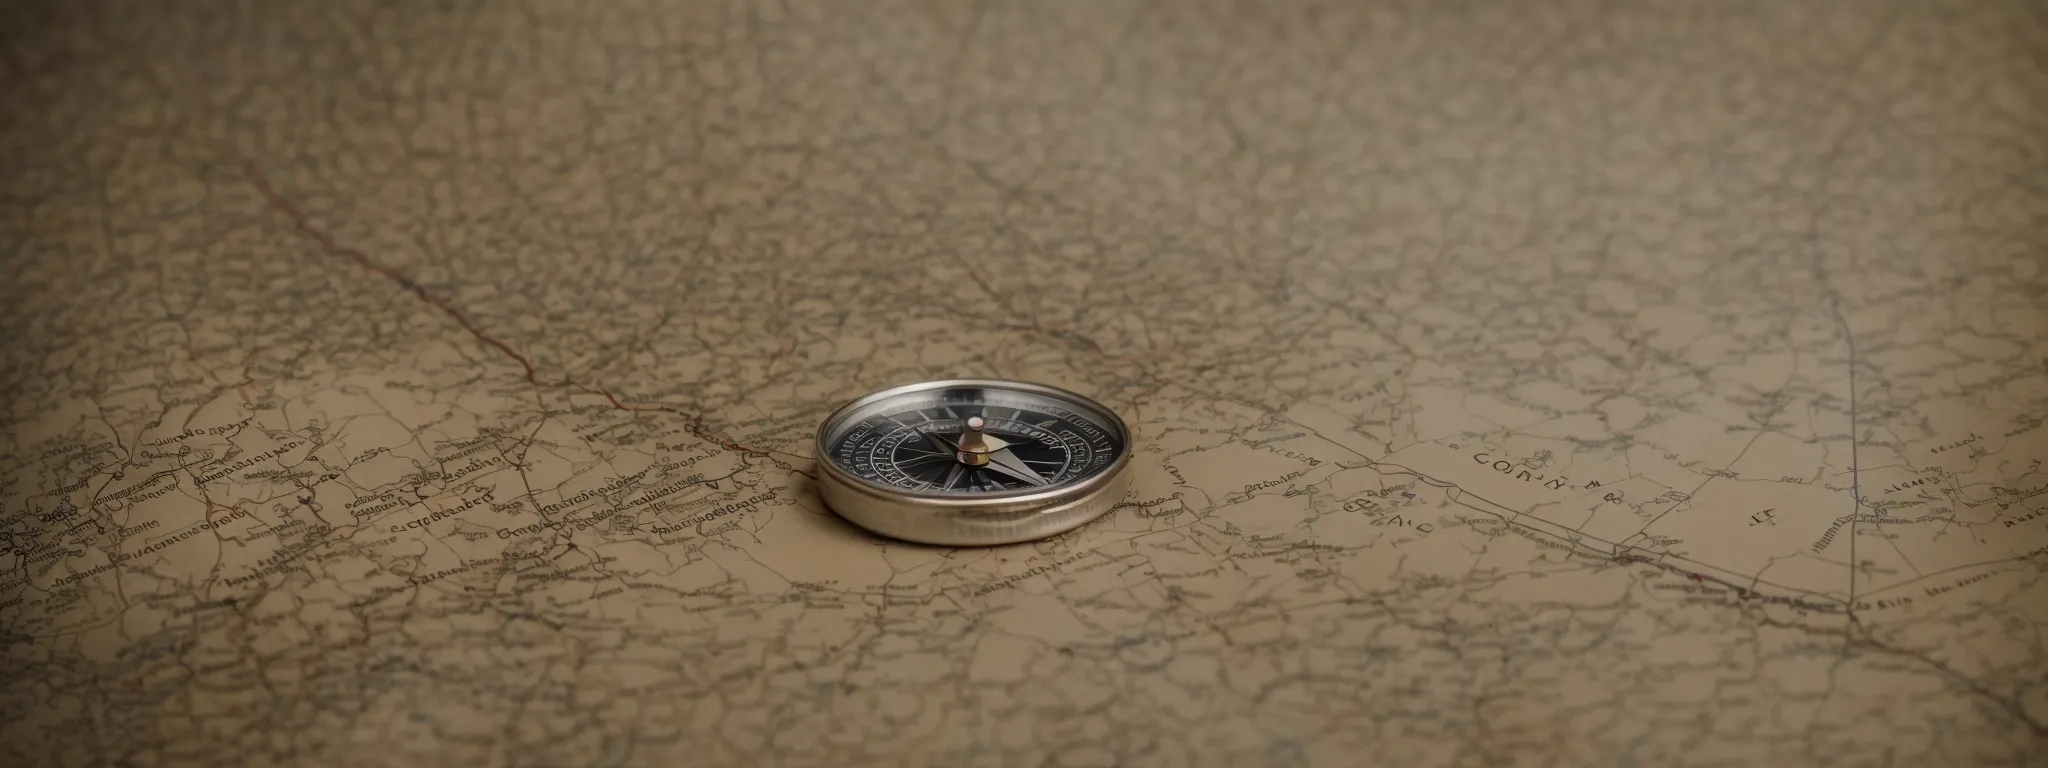 a compass on a map symbolizing strategic navigation of seo goals.